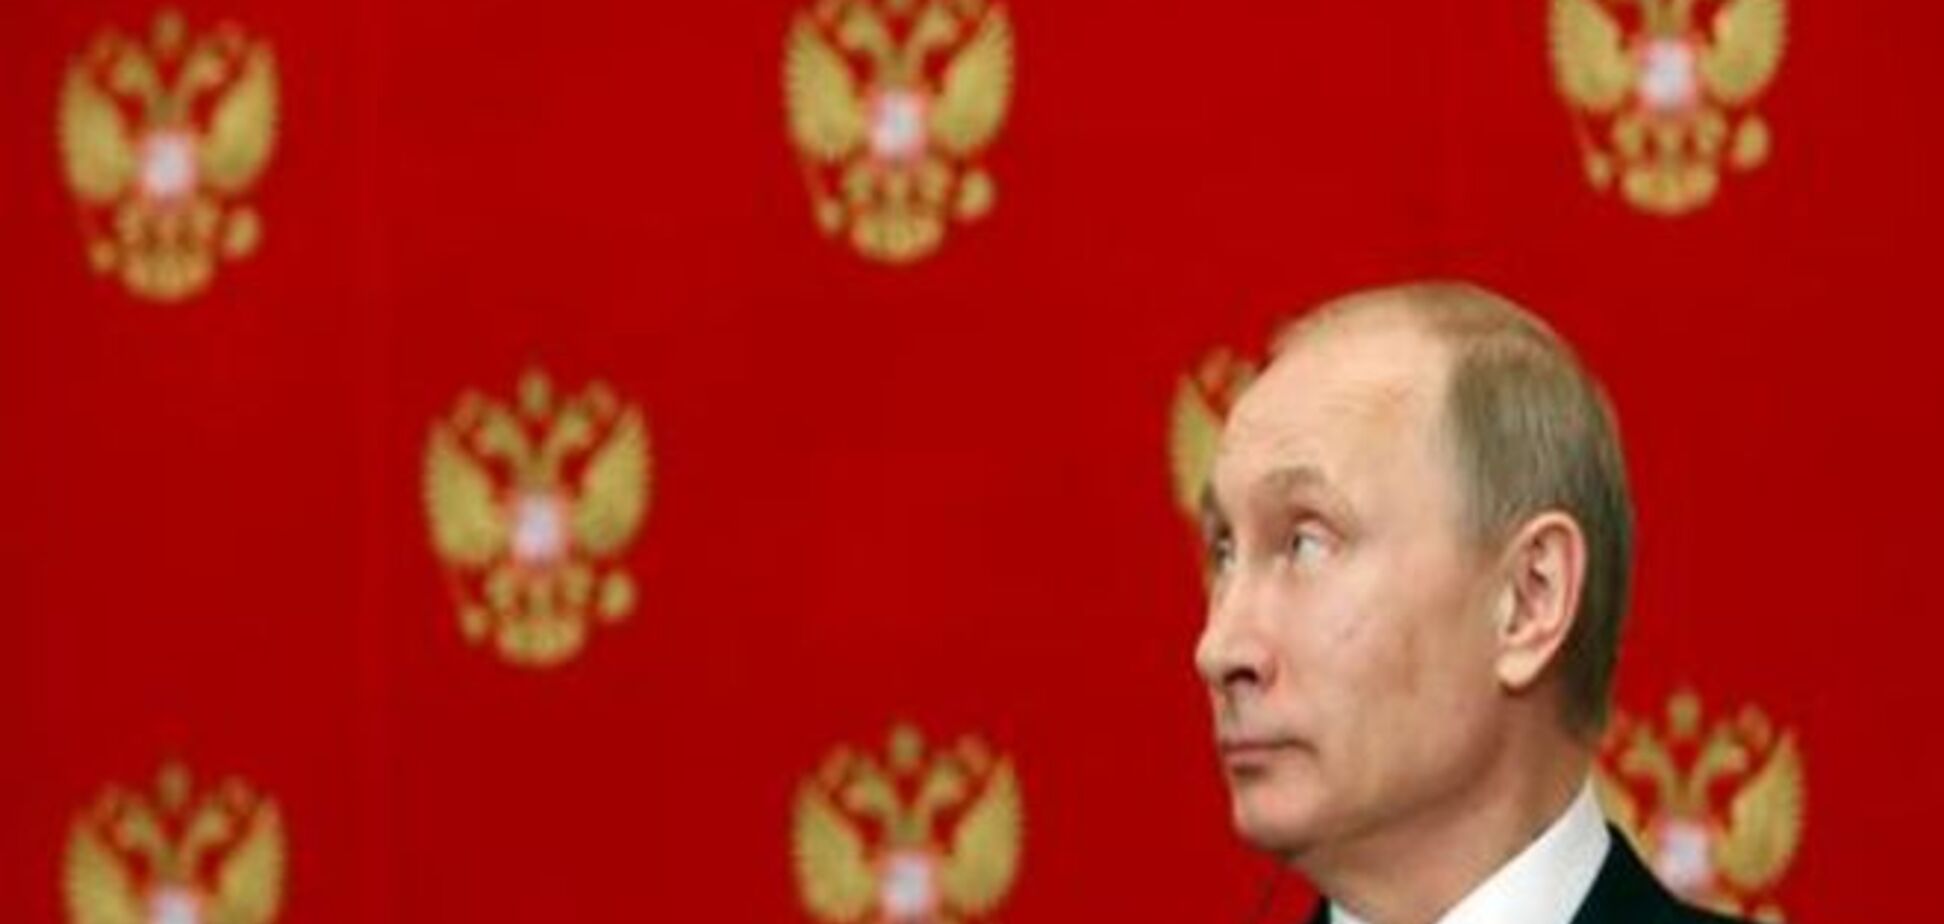 Комментарий: За 15 лет у власти Владимир Путин сам стал российским государством